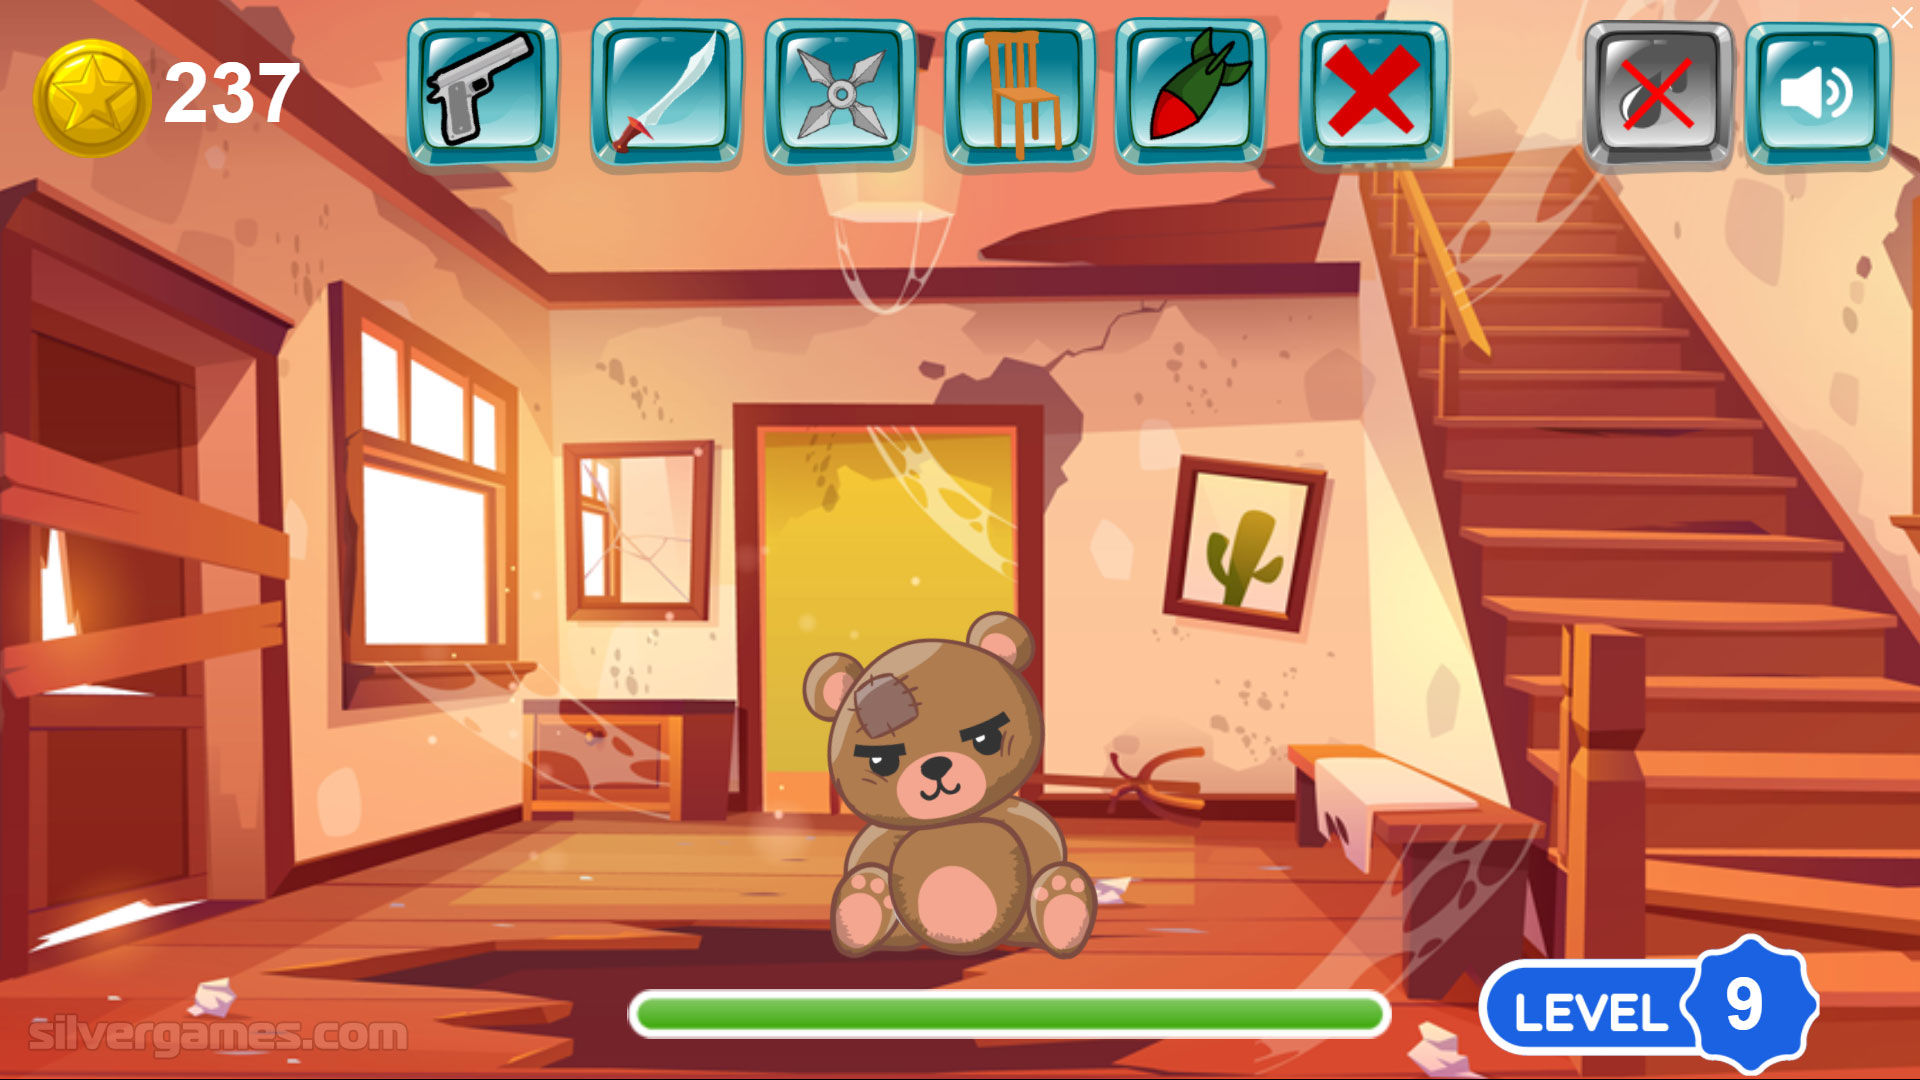 teddy bear games online